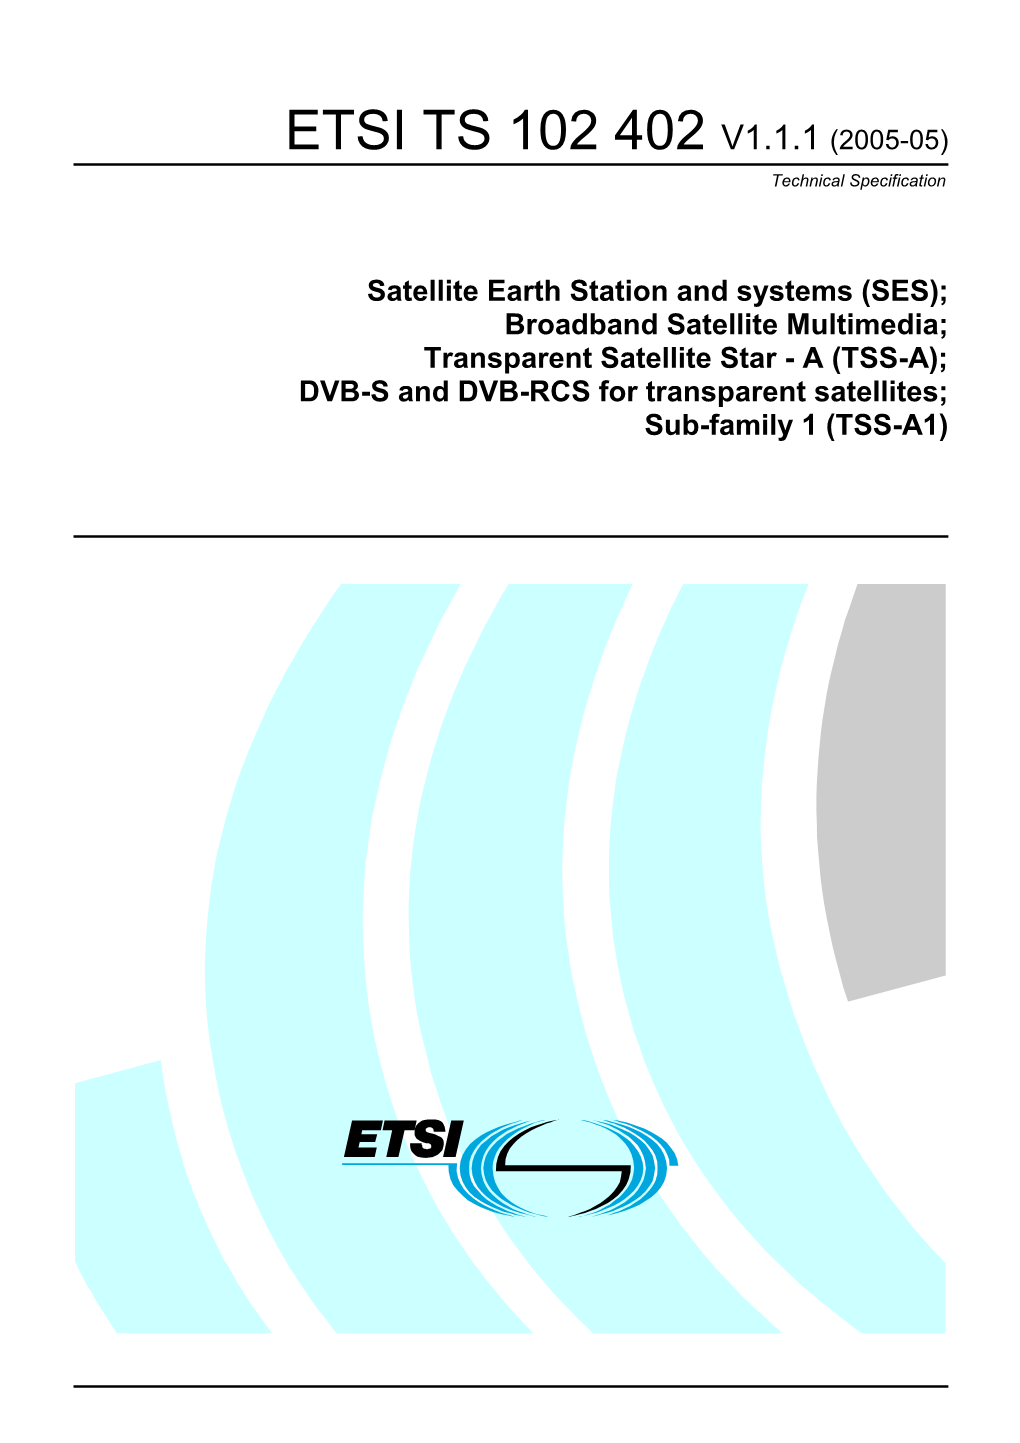 ETSI TS 102 402 V1.1.1 (2005-05) Technical Specification